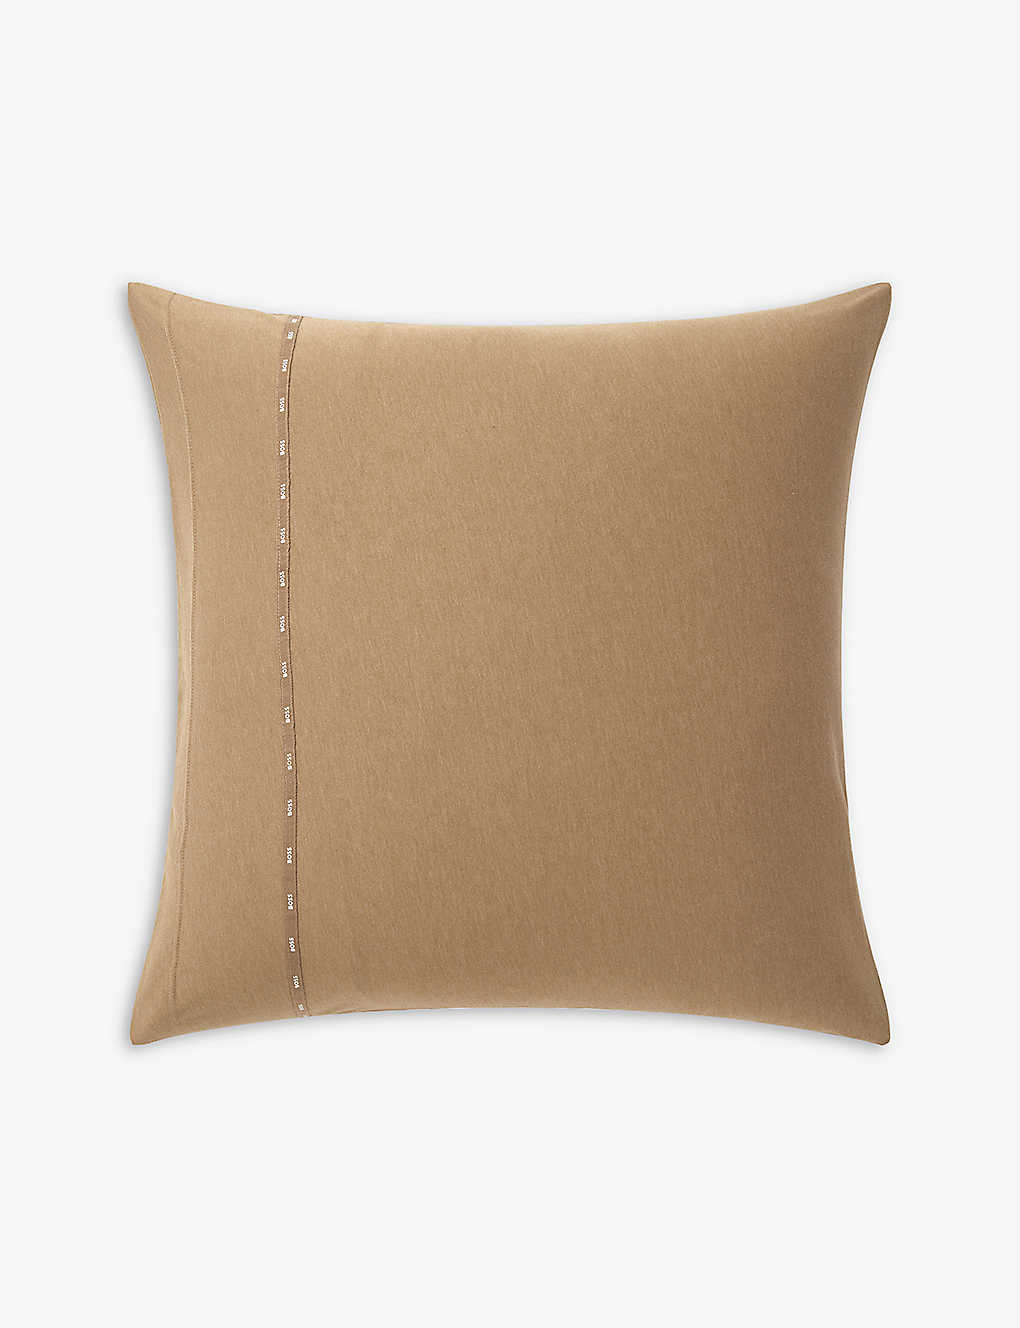 Hugo Boss Boss Camel Sense Cotton-blend Square Pillowcase 65cmx65cm